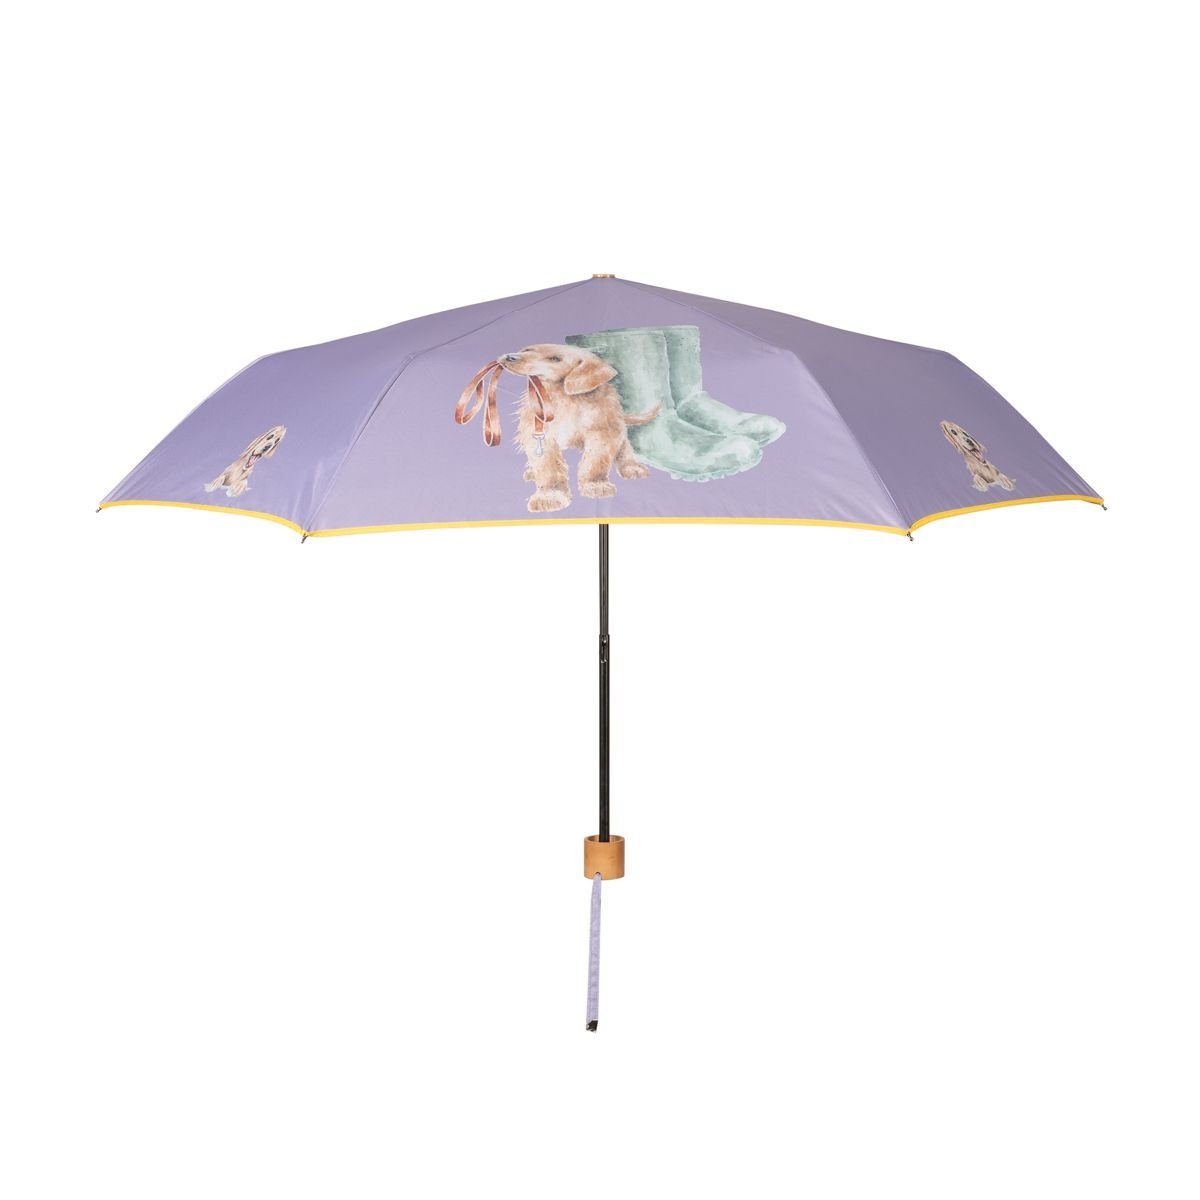 Hunde-Wetter Wrendale Designs Taschen-Regenschirm Wrendale Taschenregenschirm